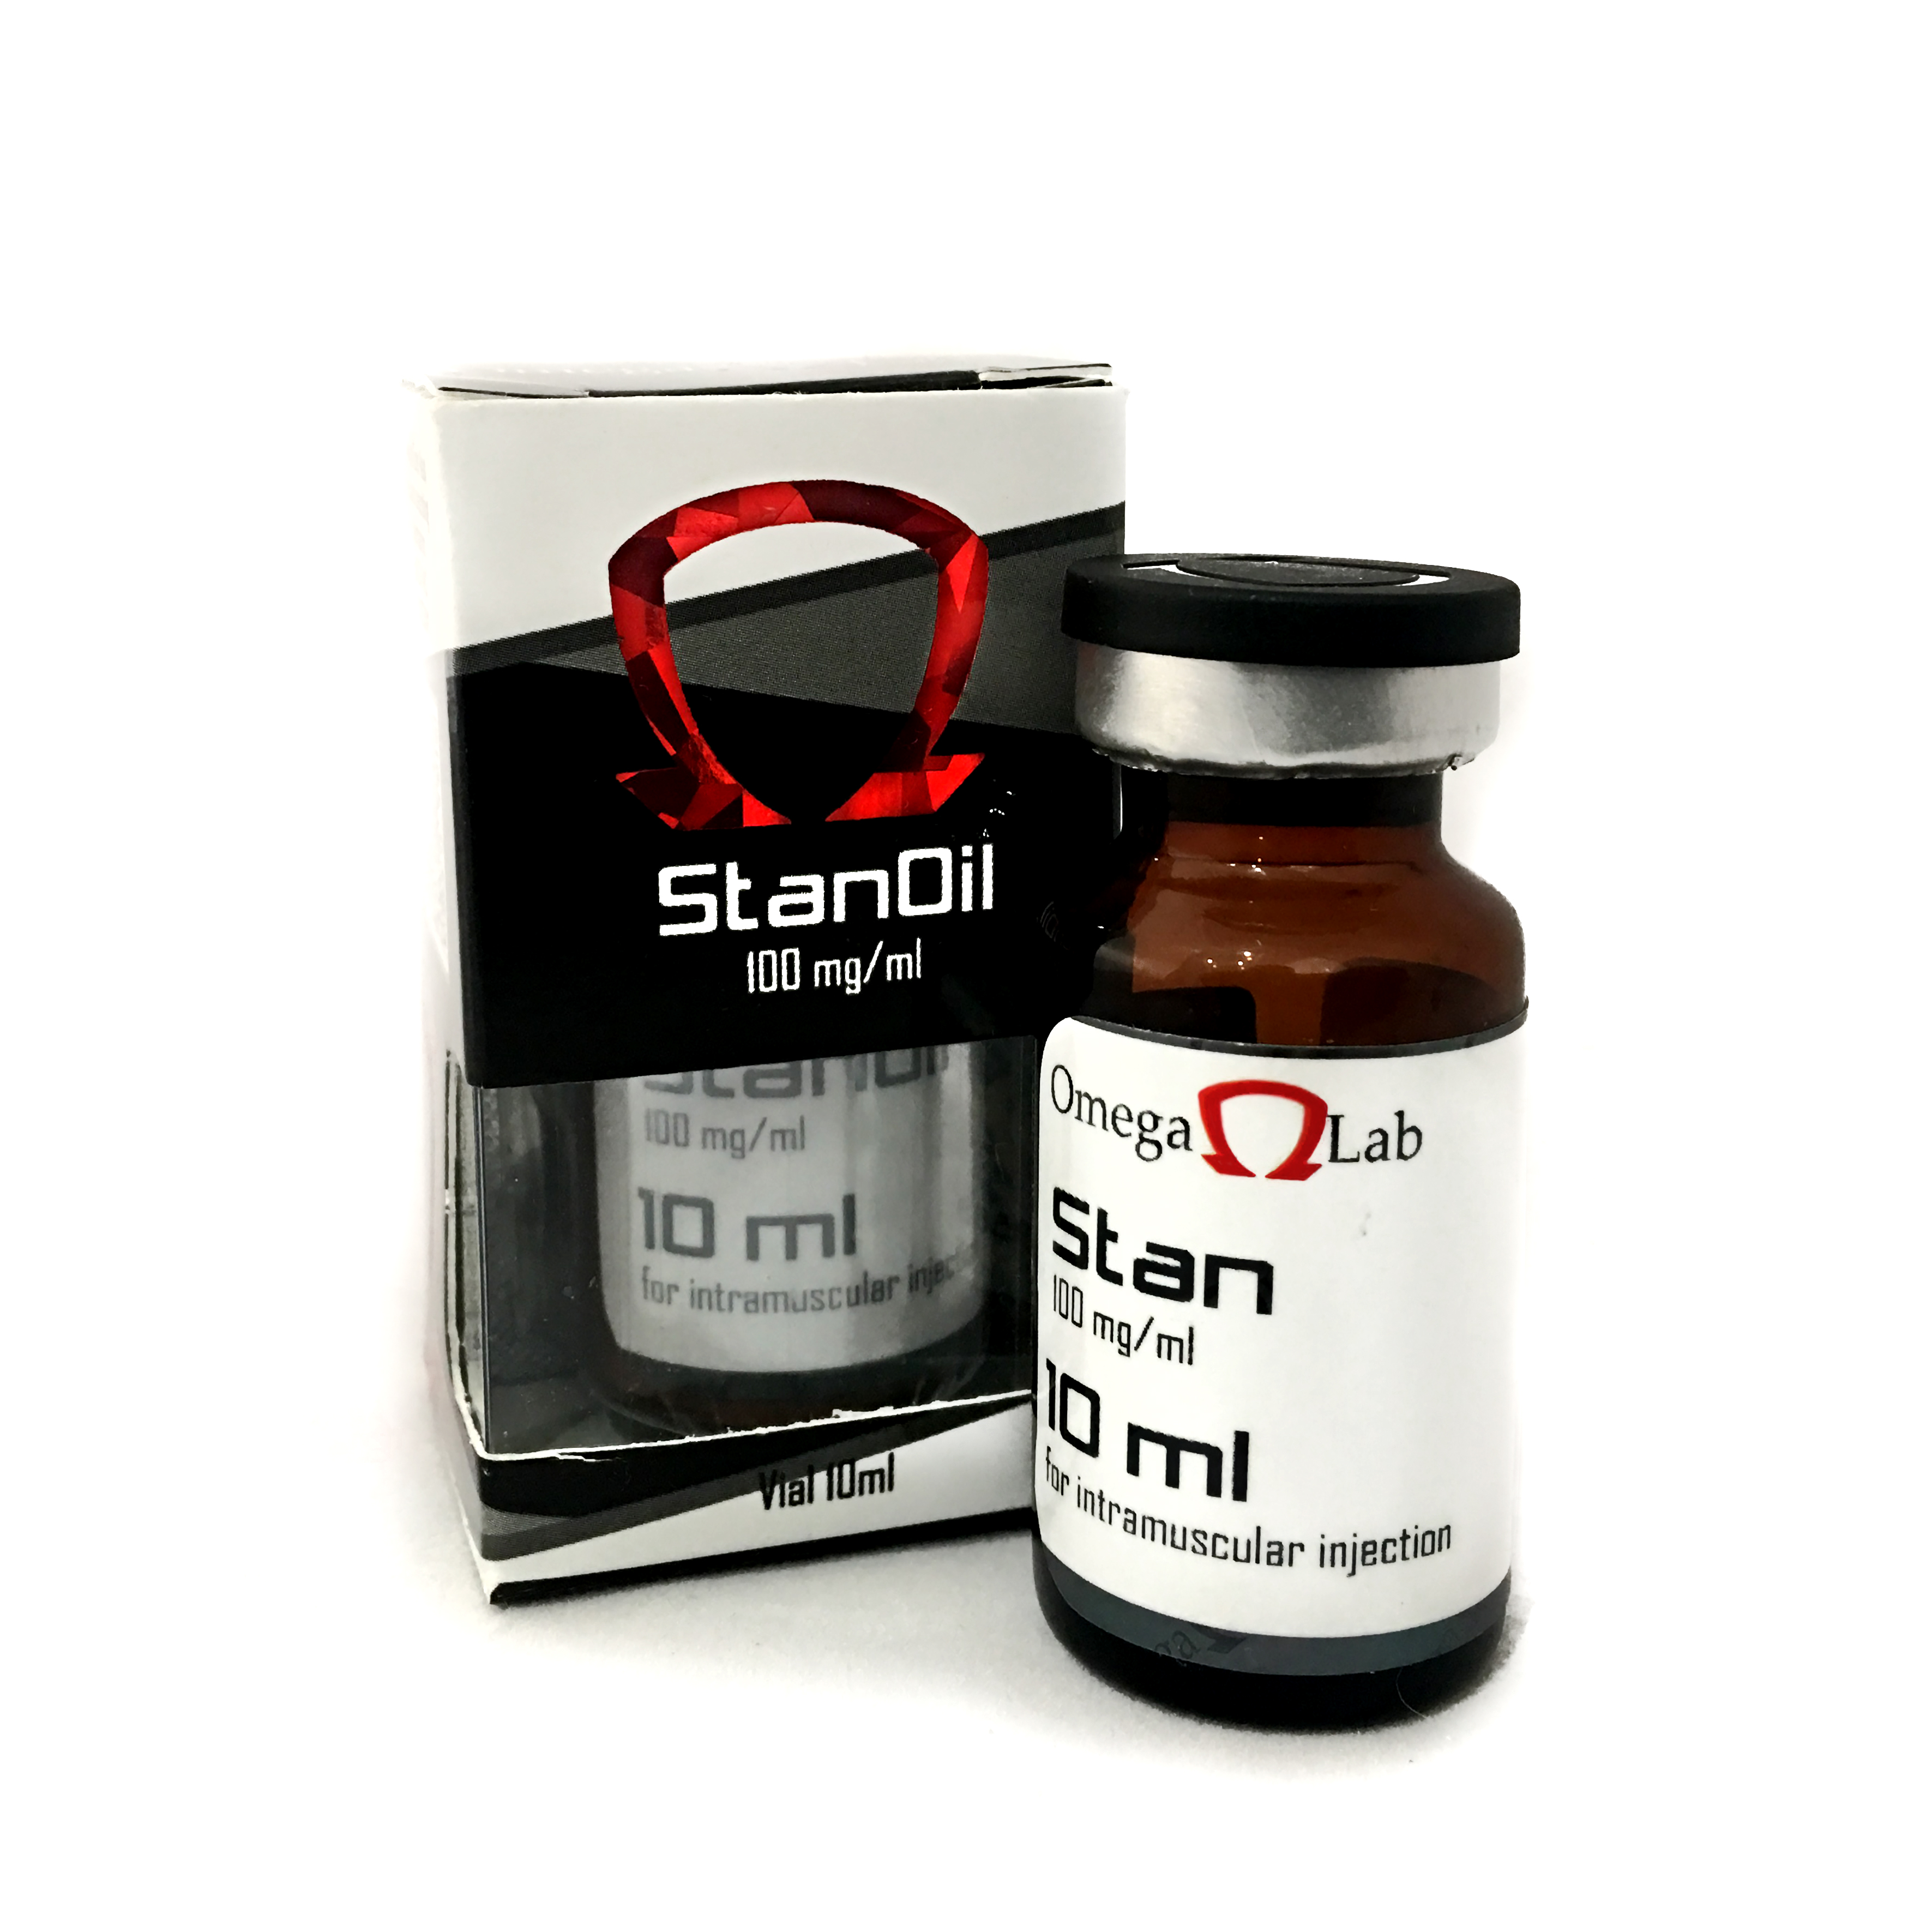 Stan-oil